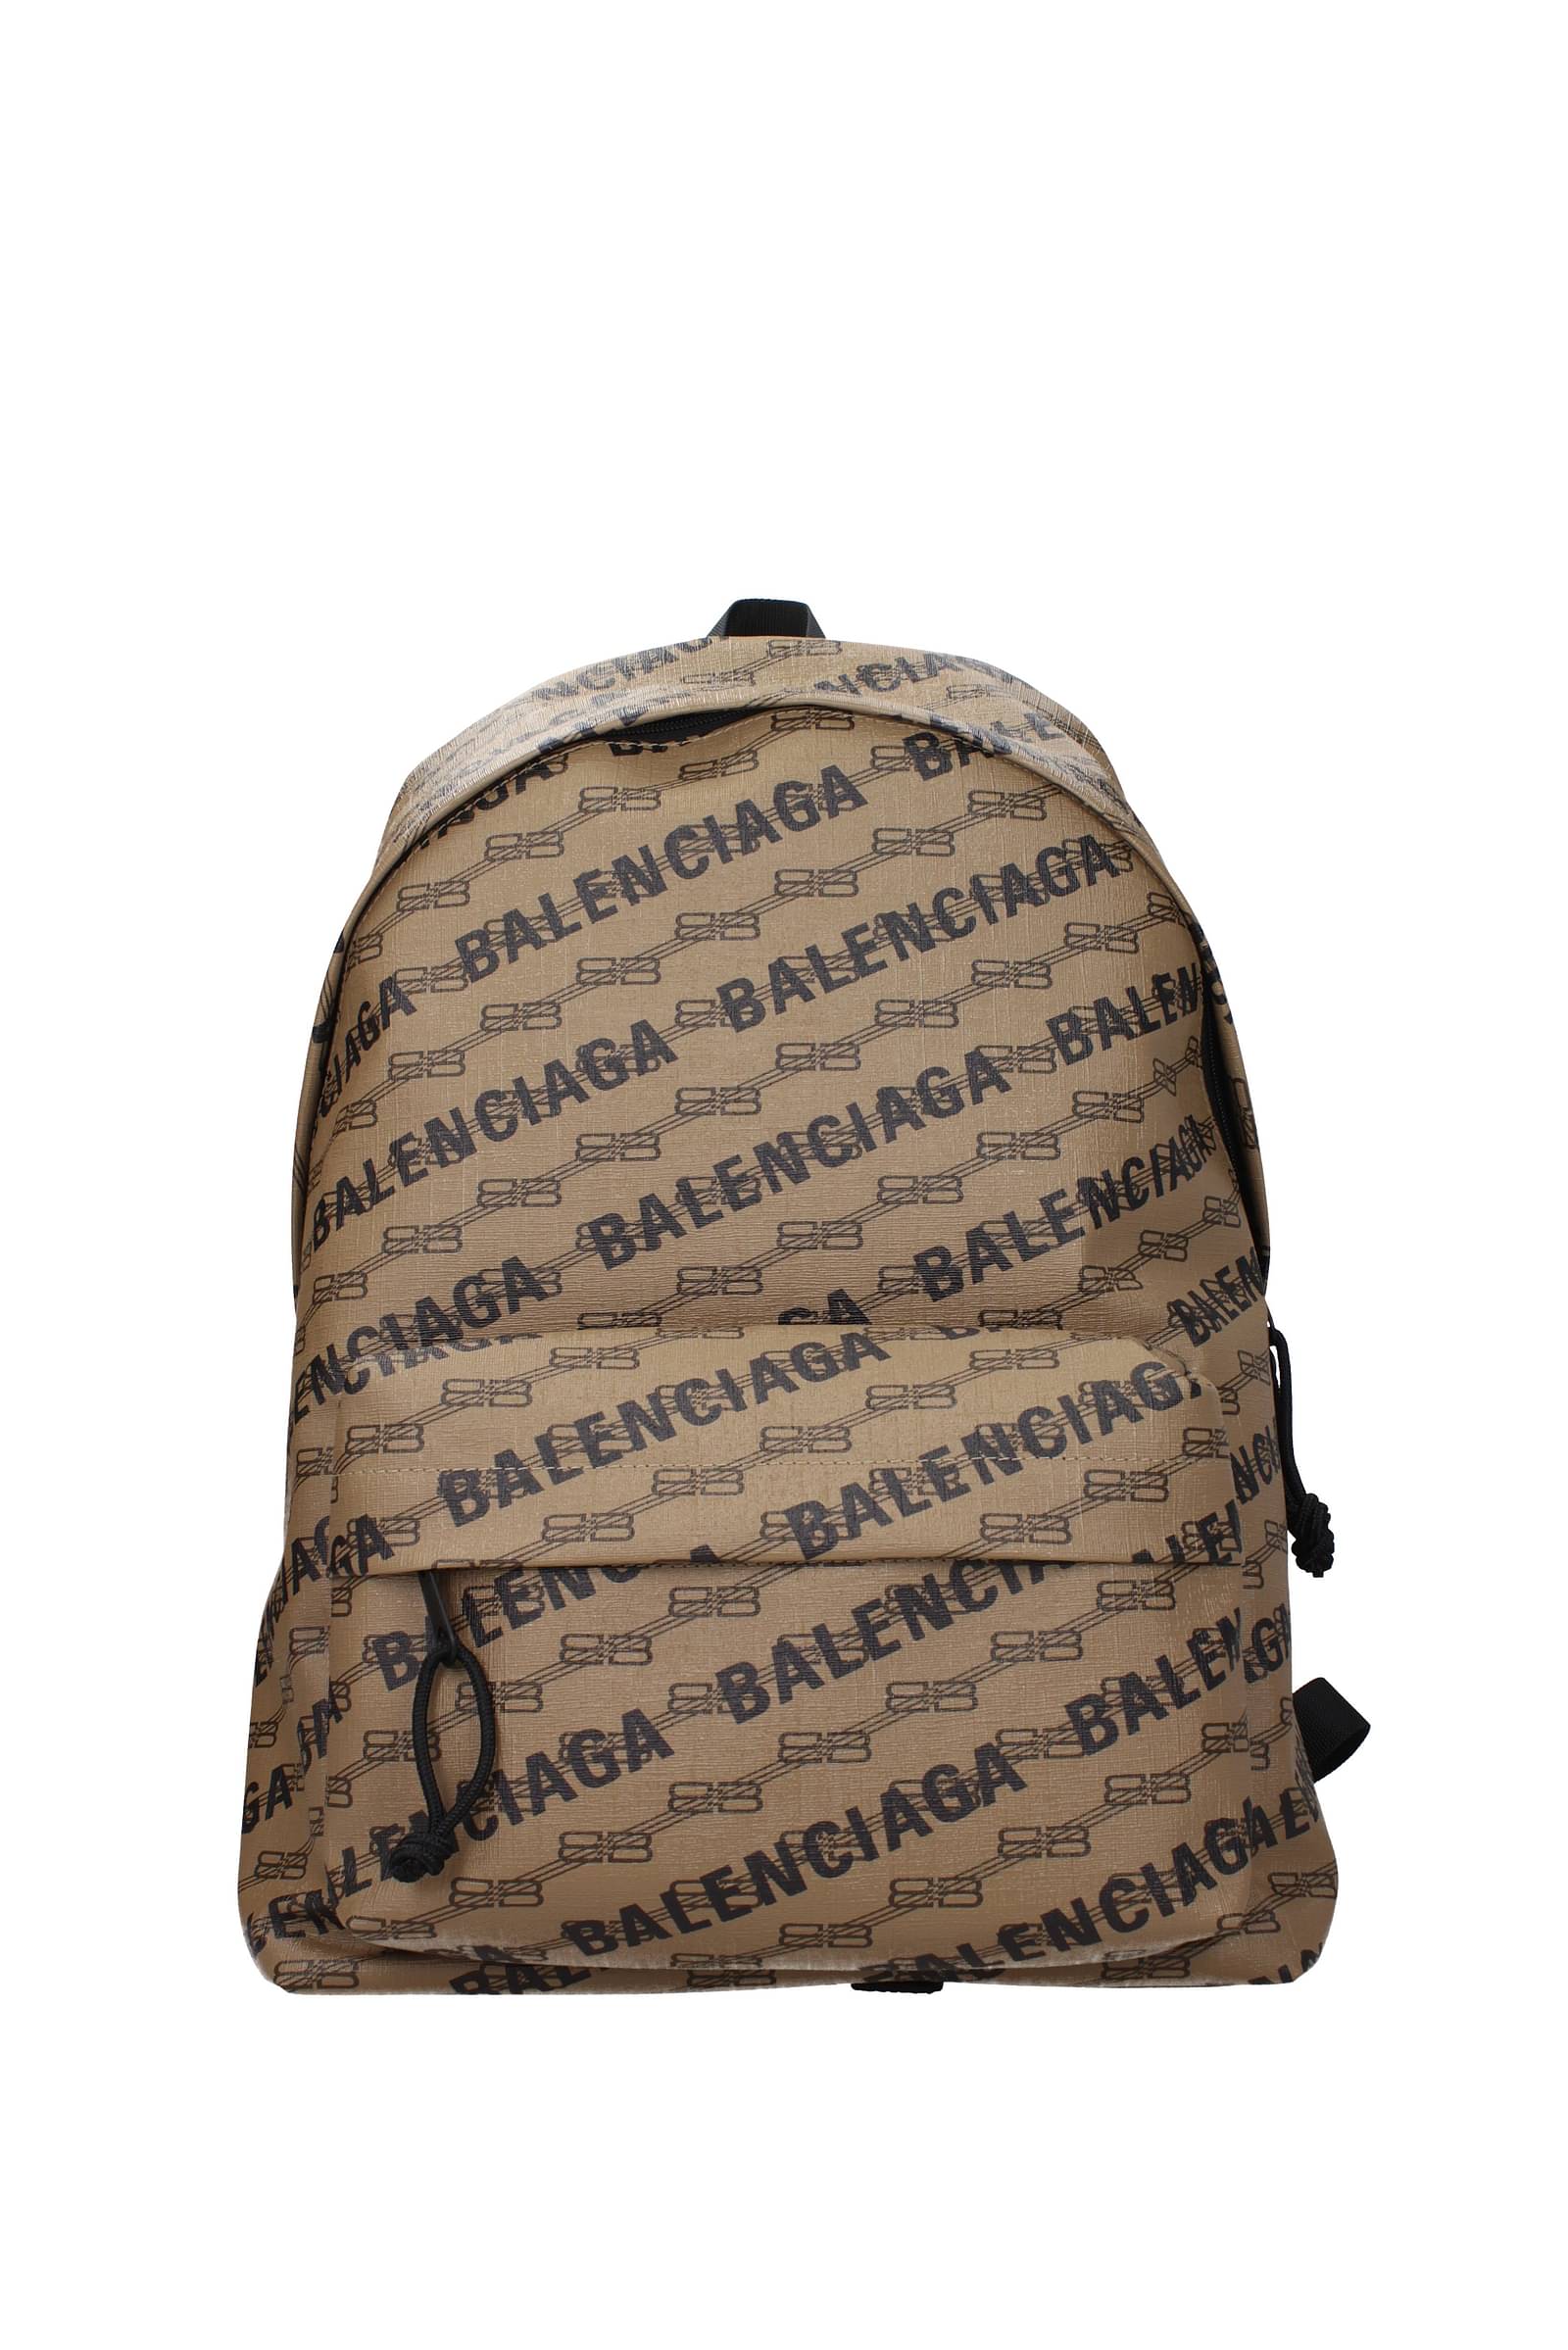 Balenciaga Bag Crumpled Calf Leather Luxury Bags  Wallets on Carousell